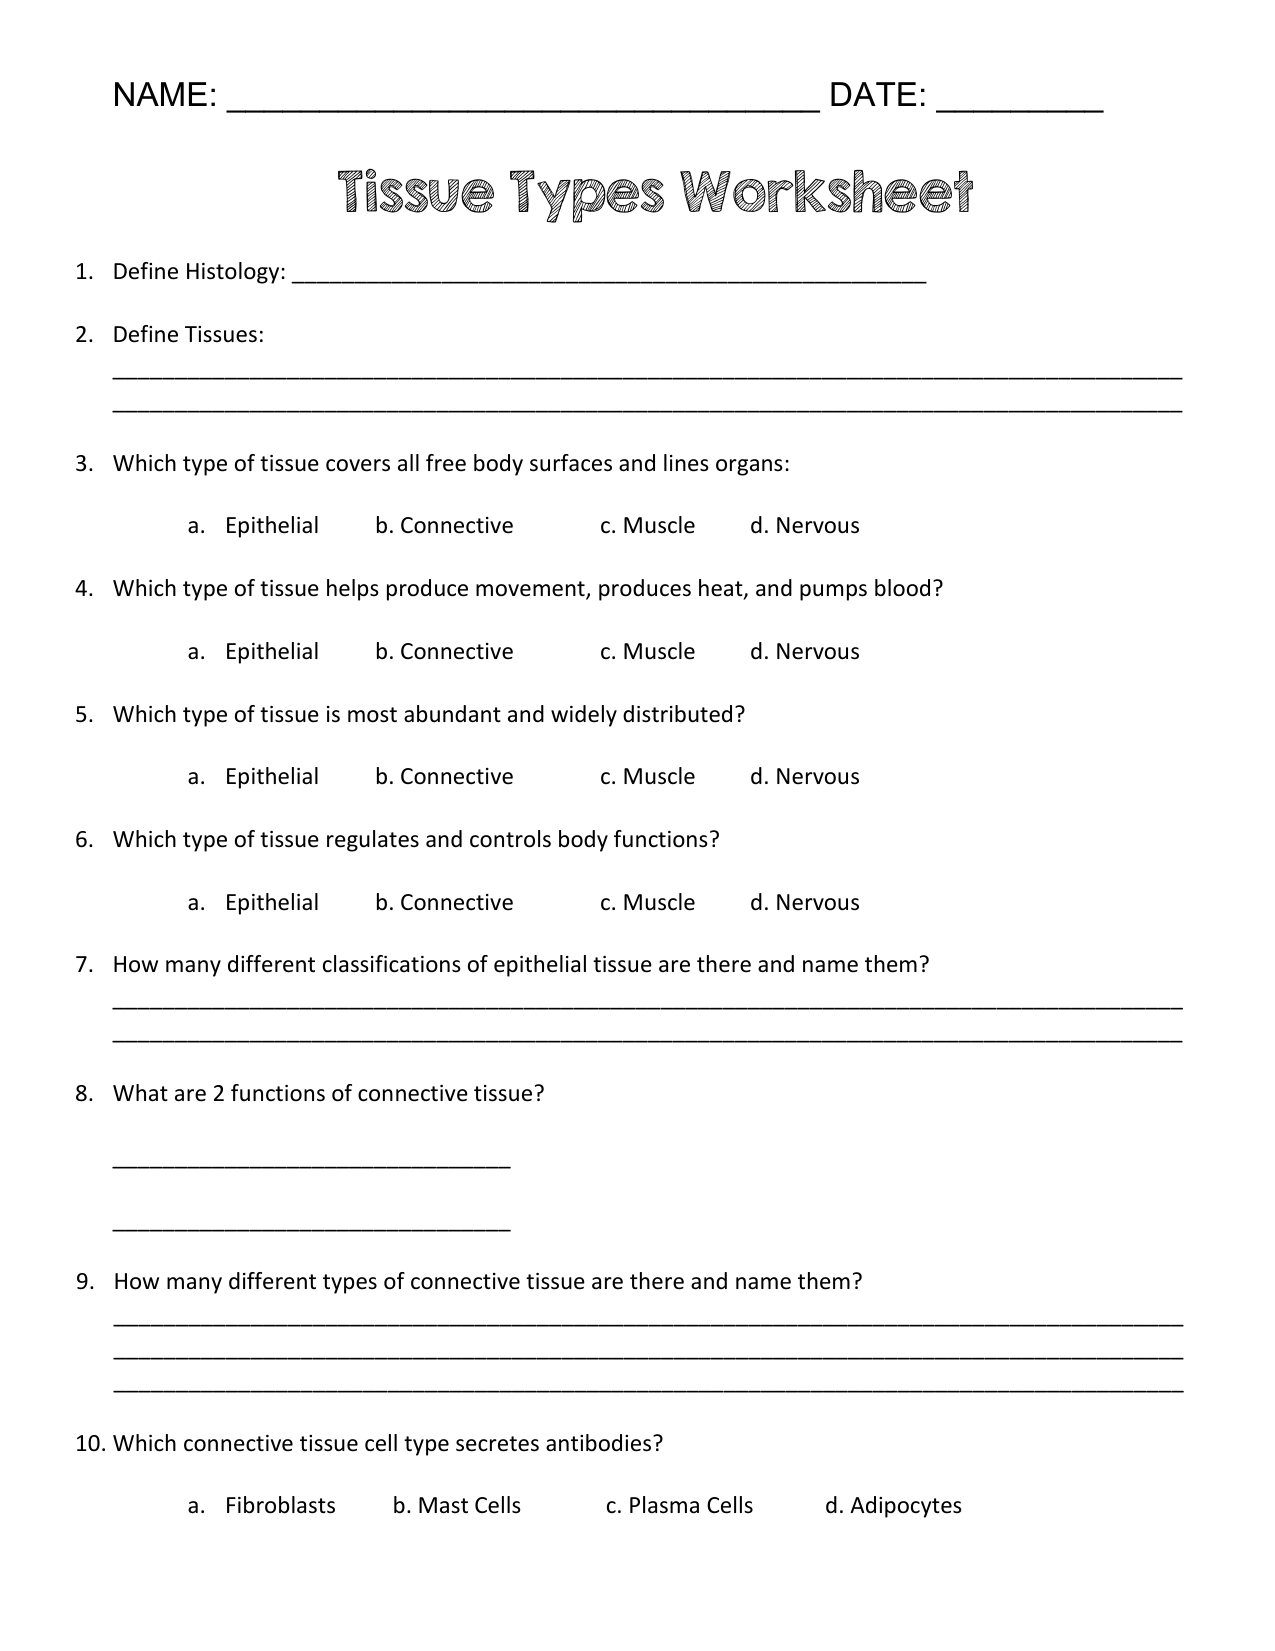 tissue types worksheet Regarding Types Of Tissues Worksheet